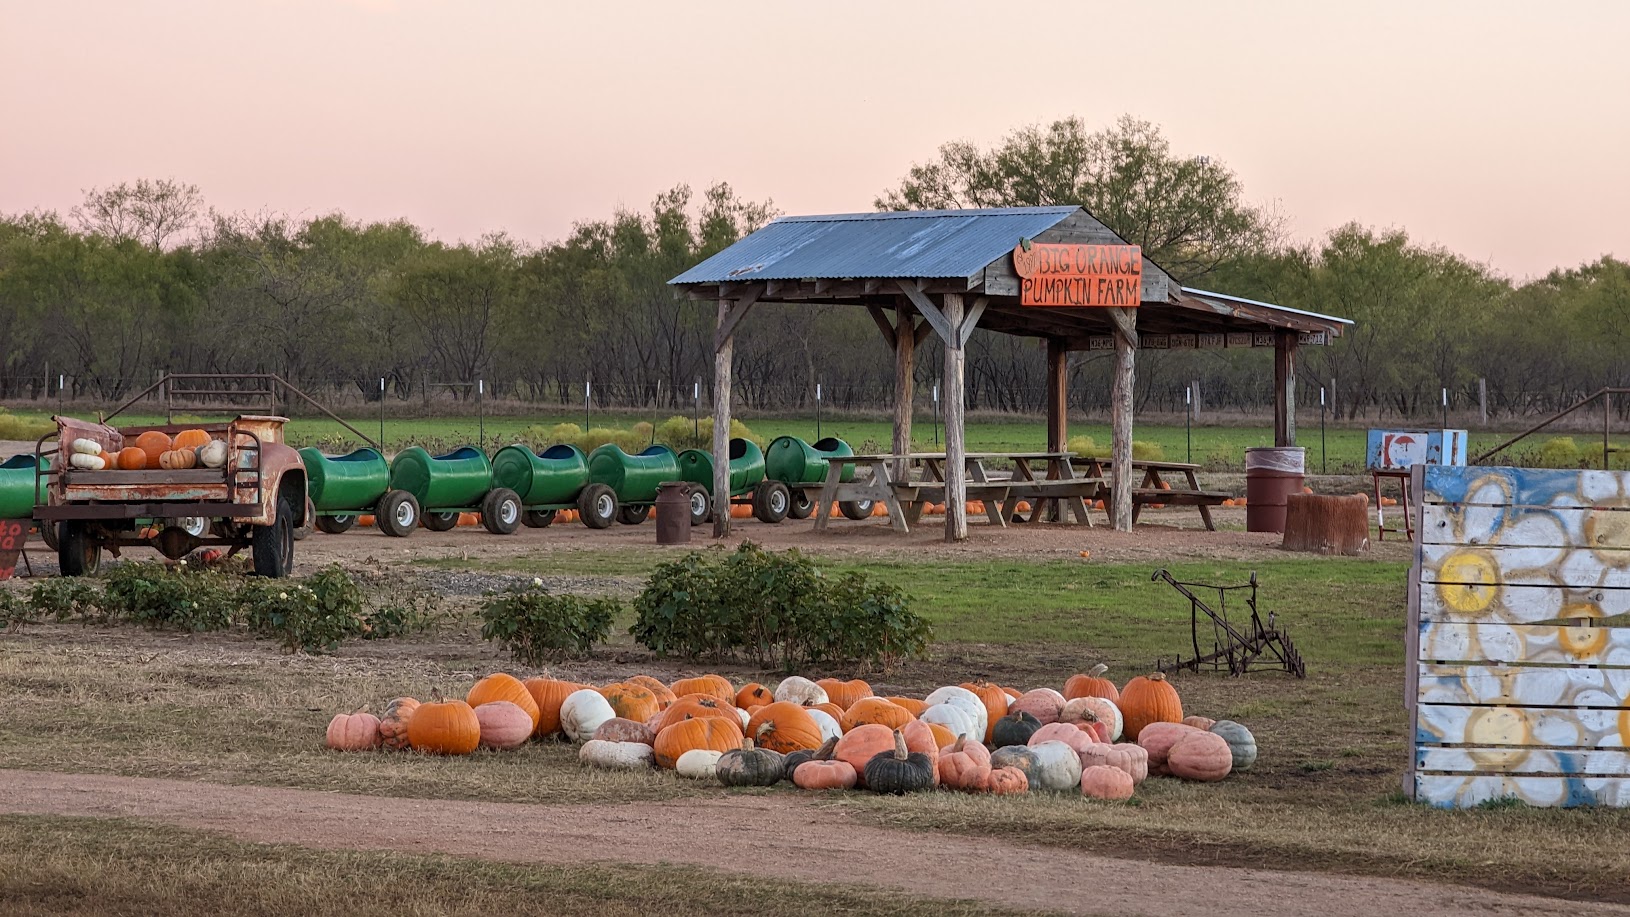 The Big Orange Pumpkin Farm